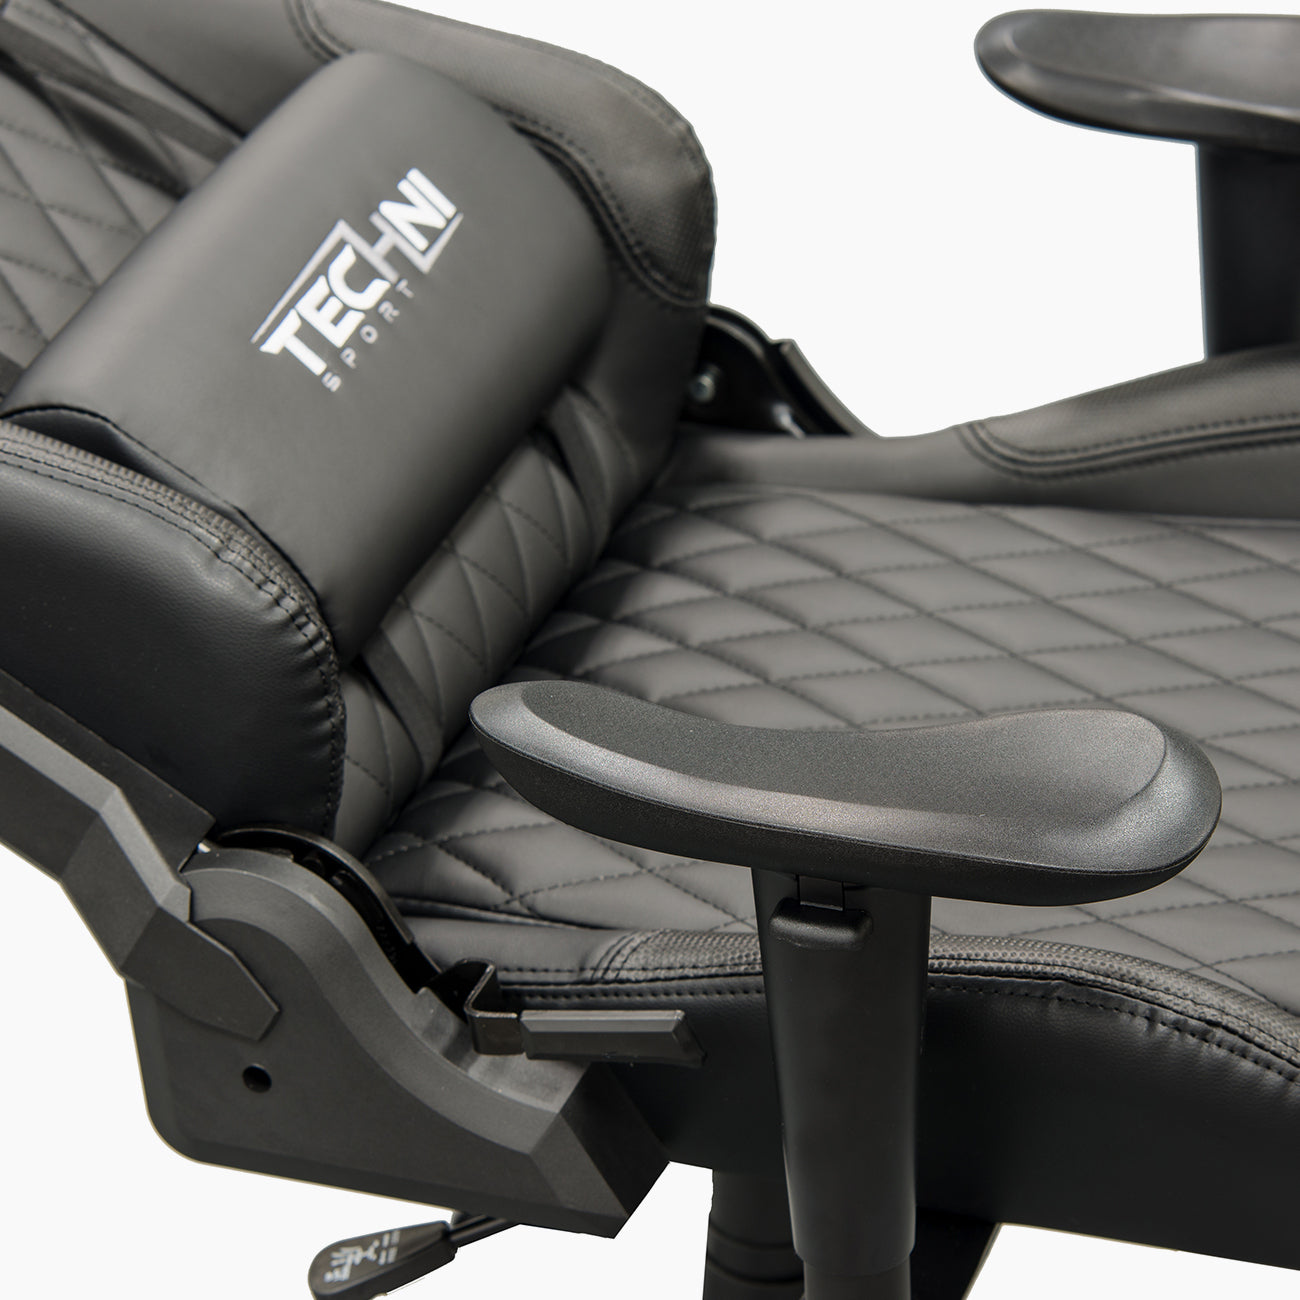 Ergonomic High Back Racer Style PC Gaming Chair, Black